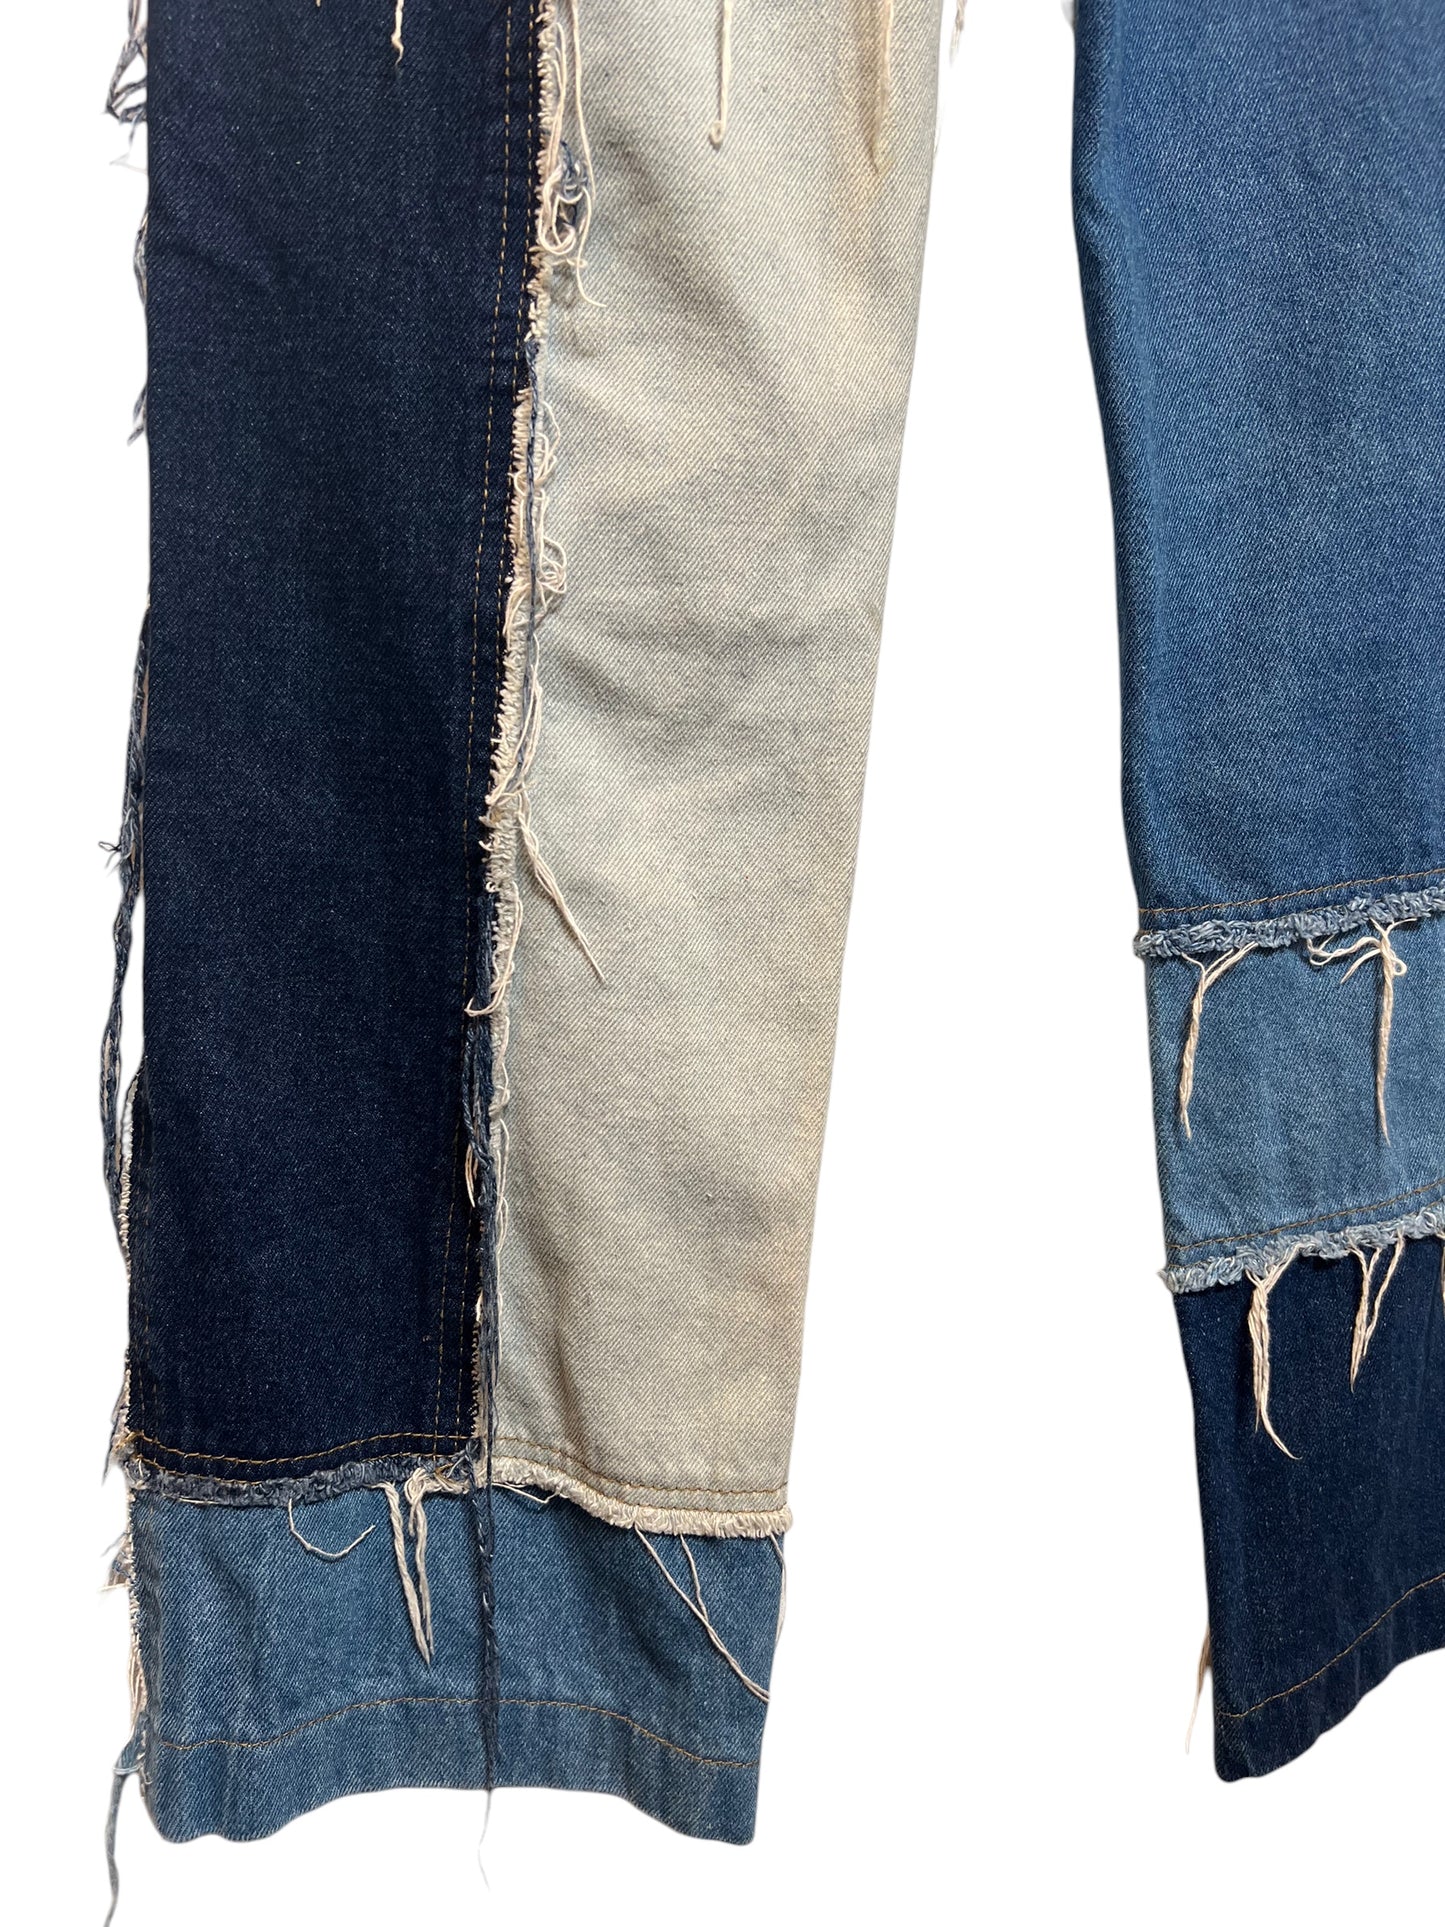 Jaded London Patchwork Jeans (Size W29)